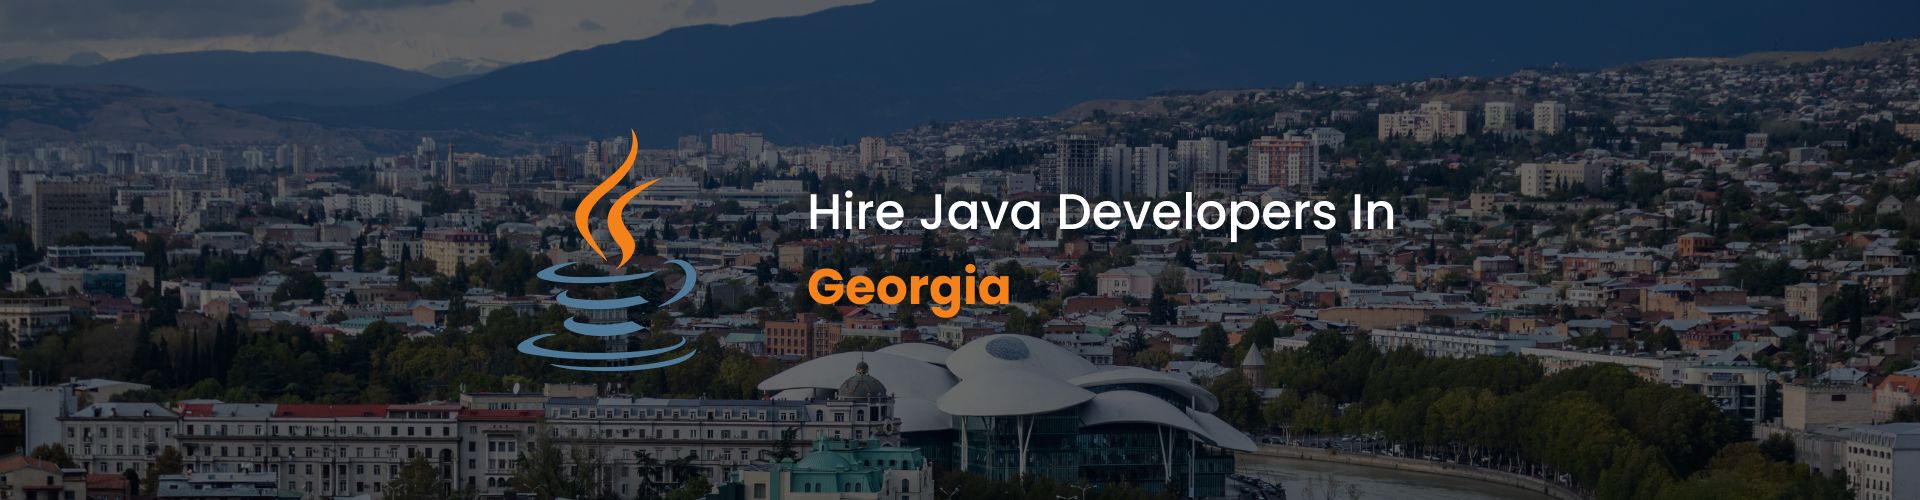 hire java developers in georgia